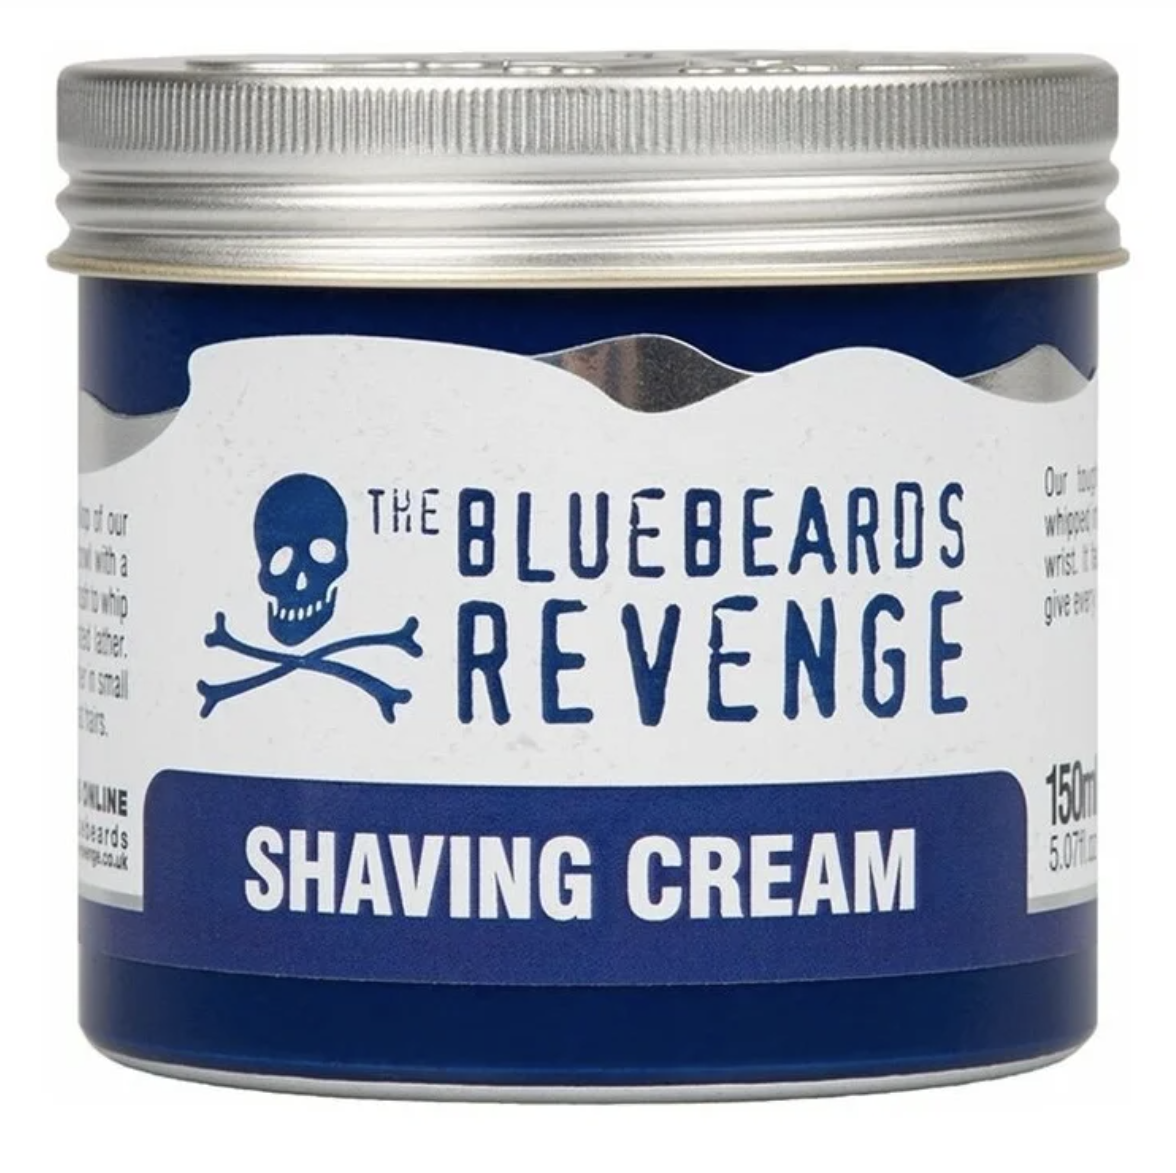 The Bluebeards Revenge Shaving Cream - Крем для бритья 150 мл